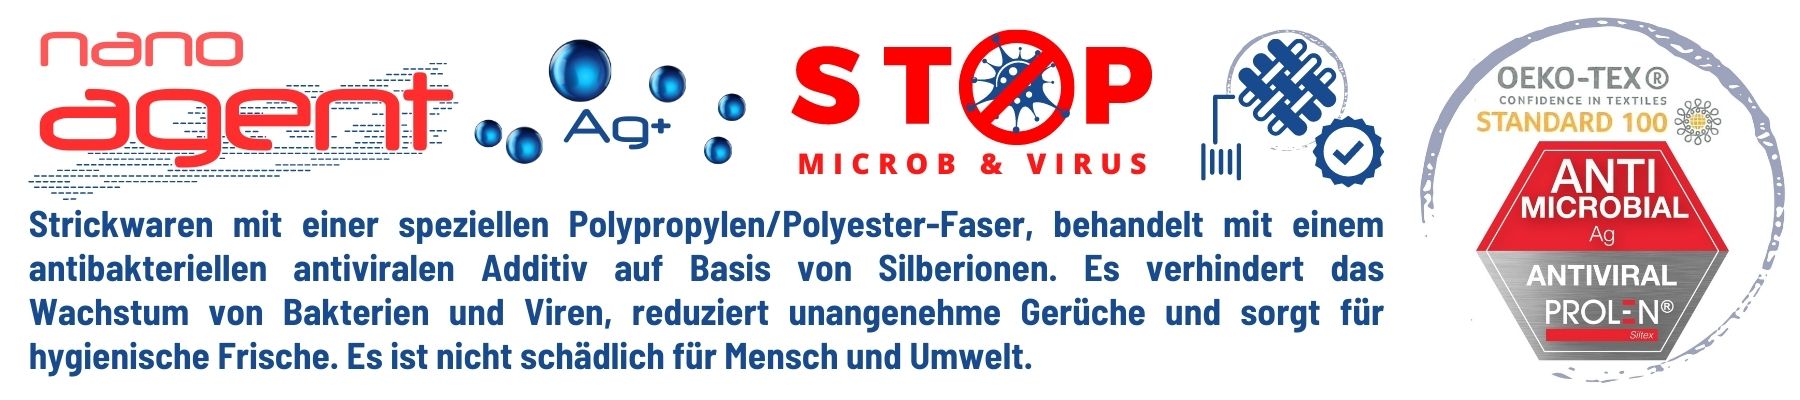 STOP MICROB